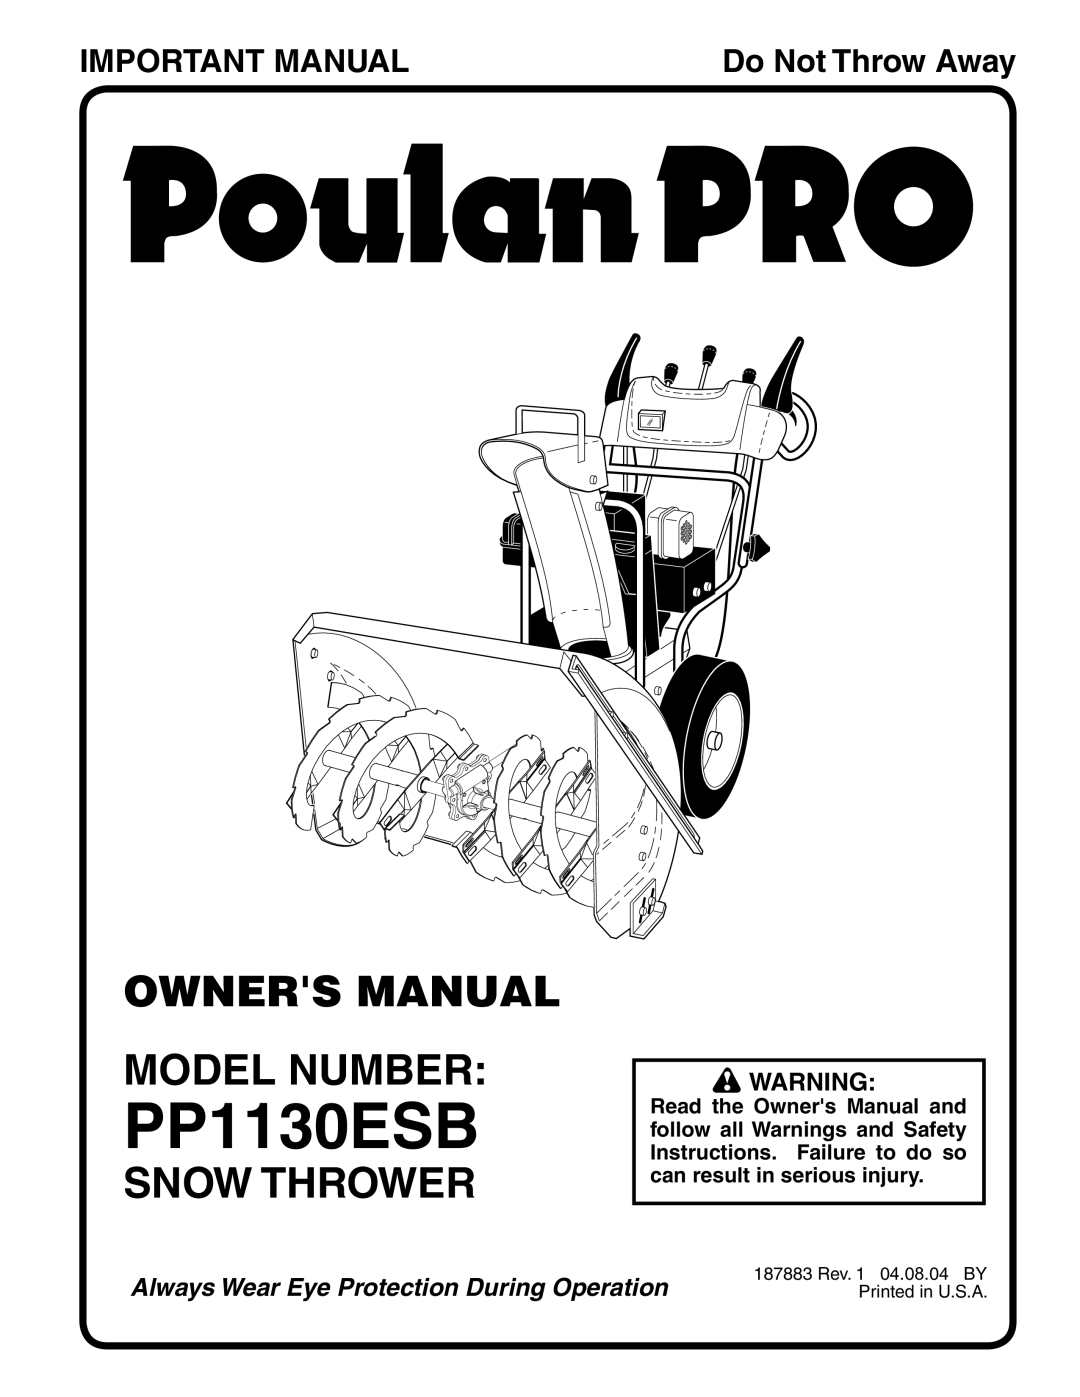 Poulan PP1130ESB owner manual Snow Thrower, Important Manual, Do Not Throw Away 